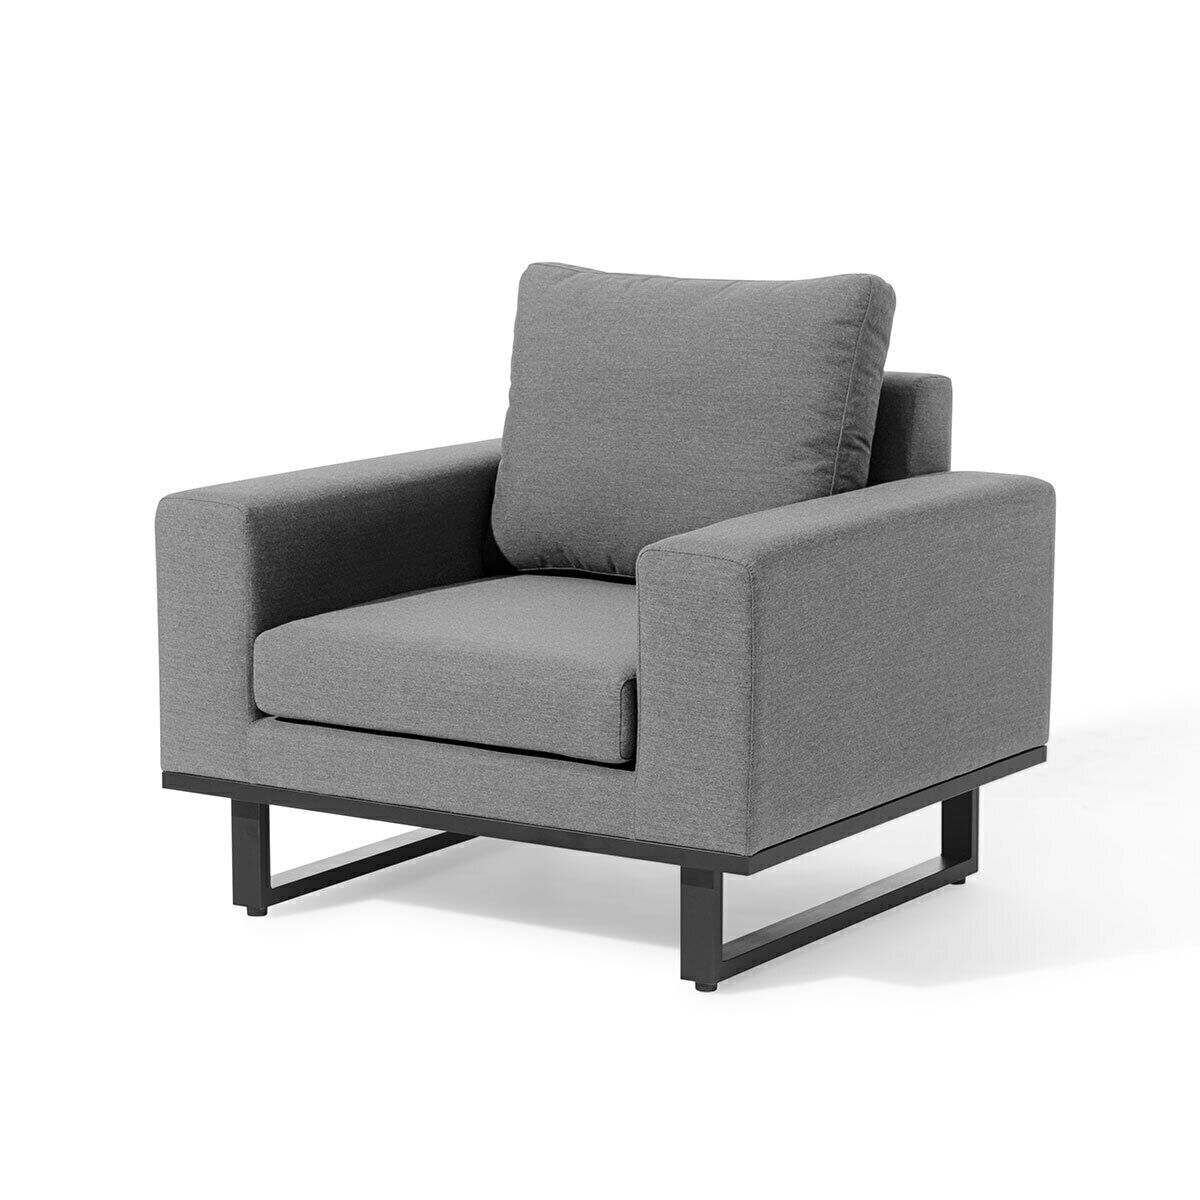 Maze - Outdoor Fabric Ethos 3 Seat Sofa Set - Flanelle product image